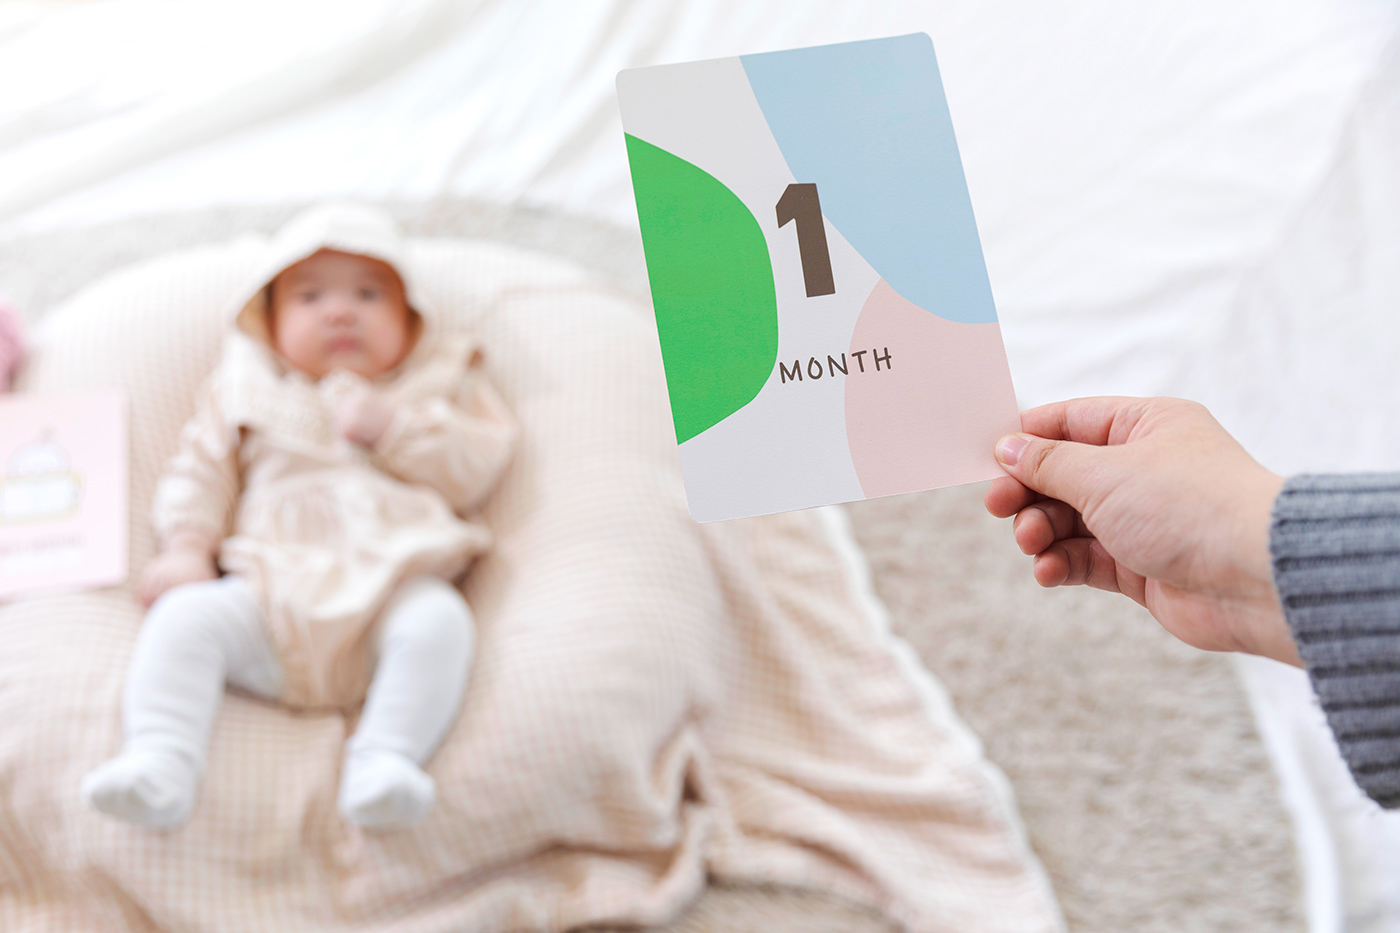 baby cards children crowdfunding jaranada Juliette child colorful risd 자라나다